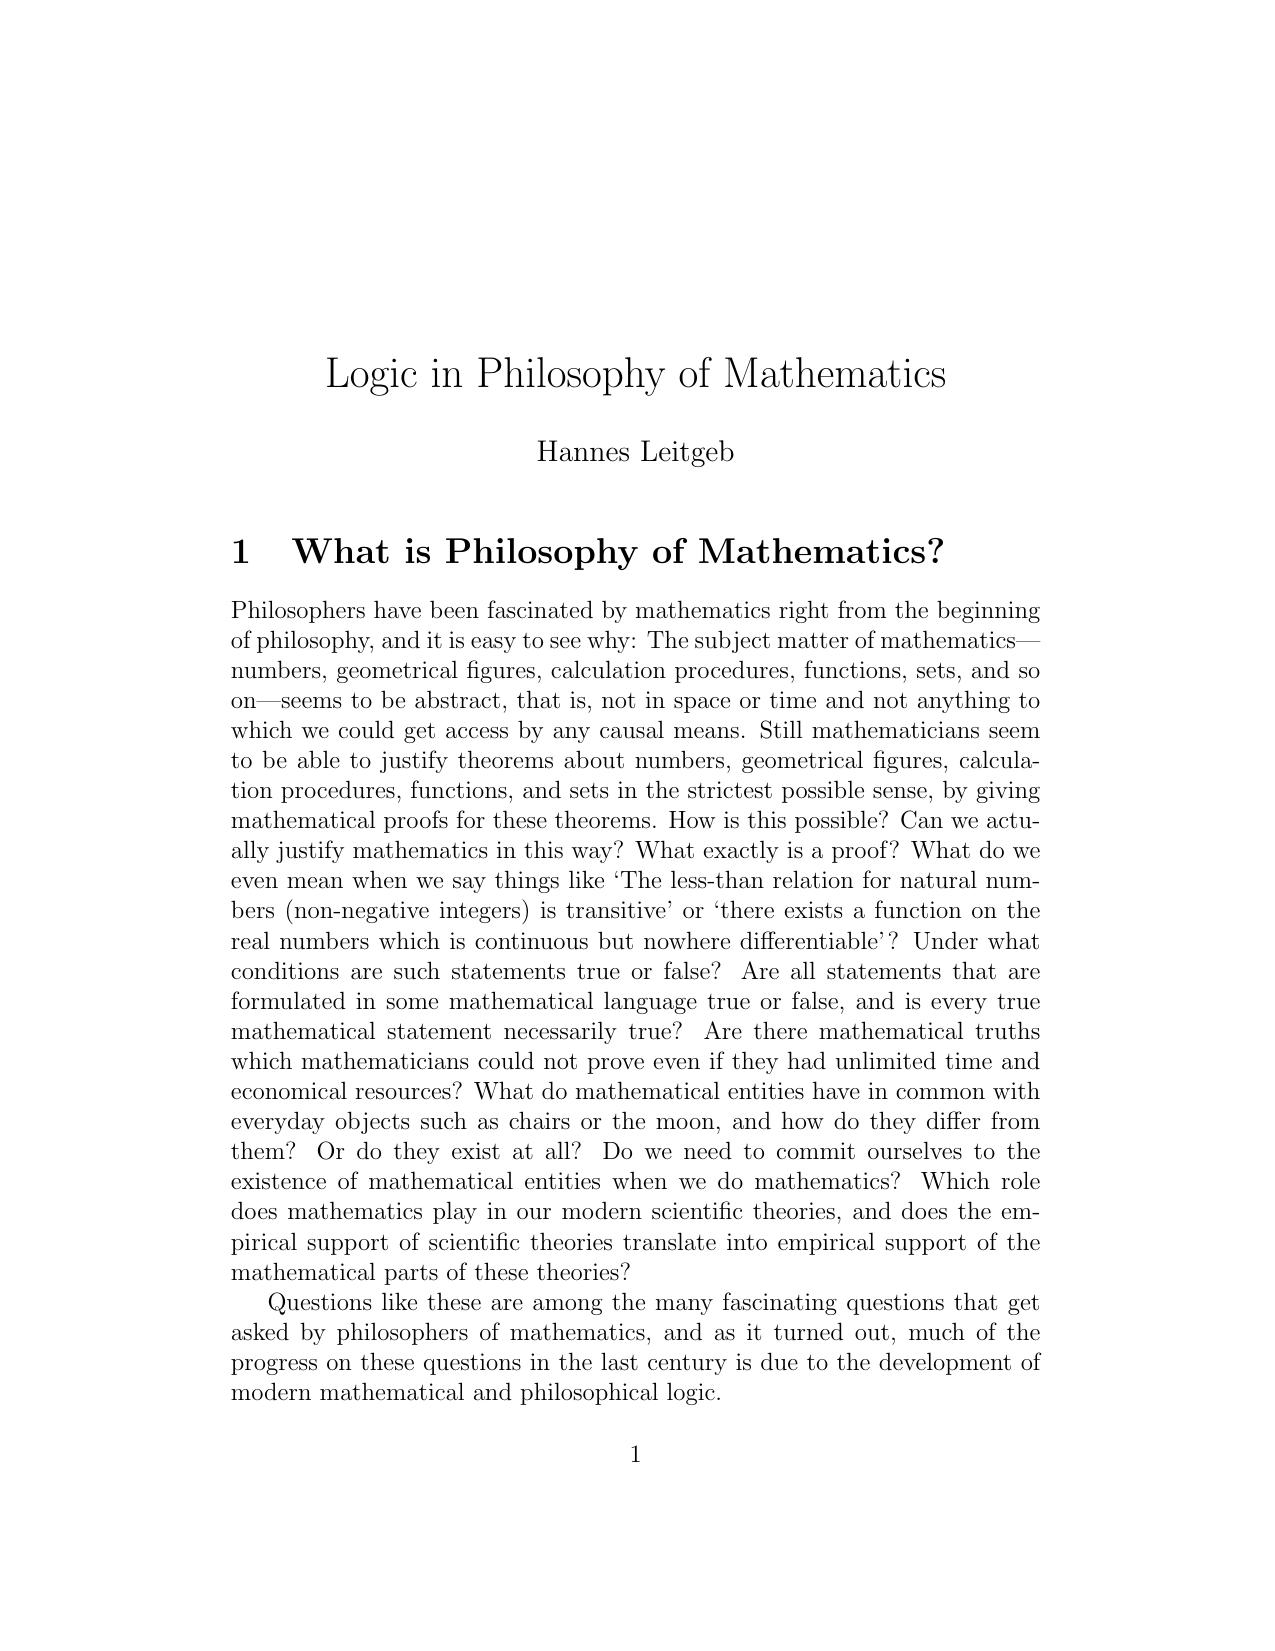 Logic and Philosophy of Mathematics - Paper